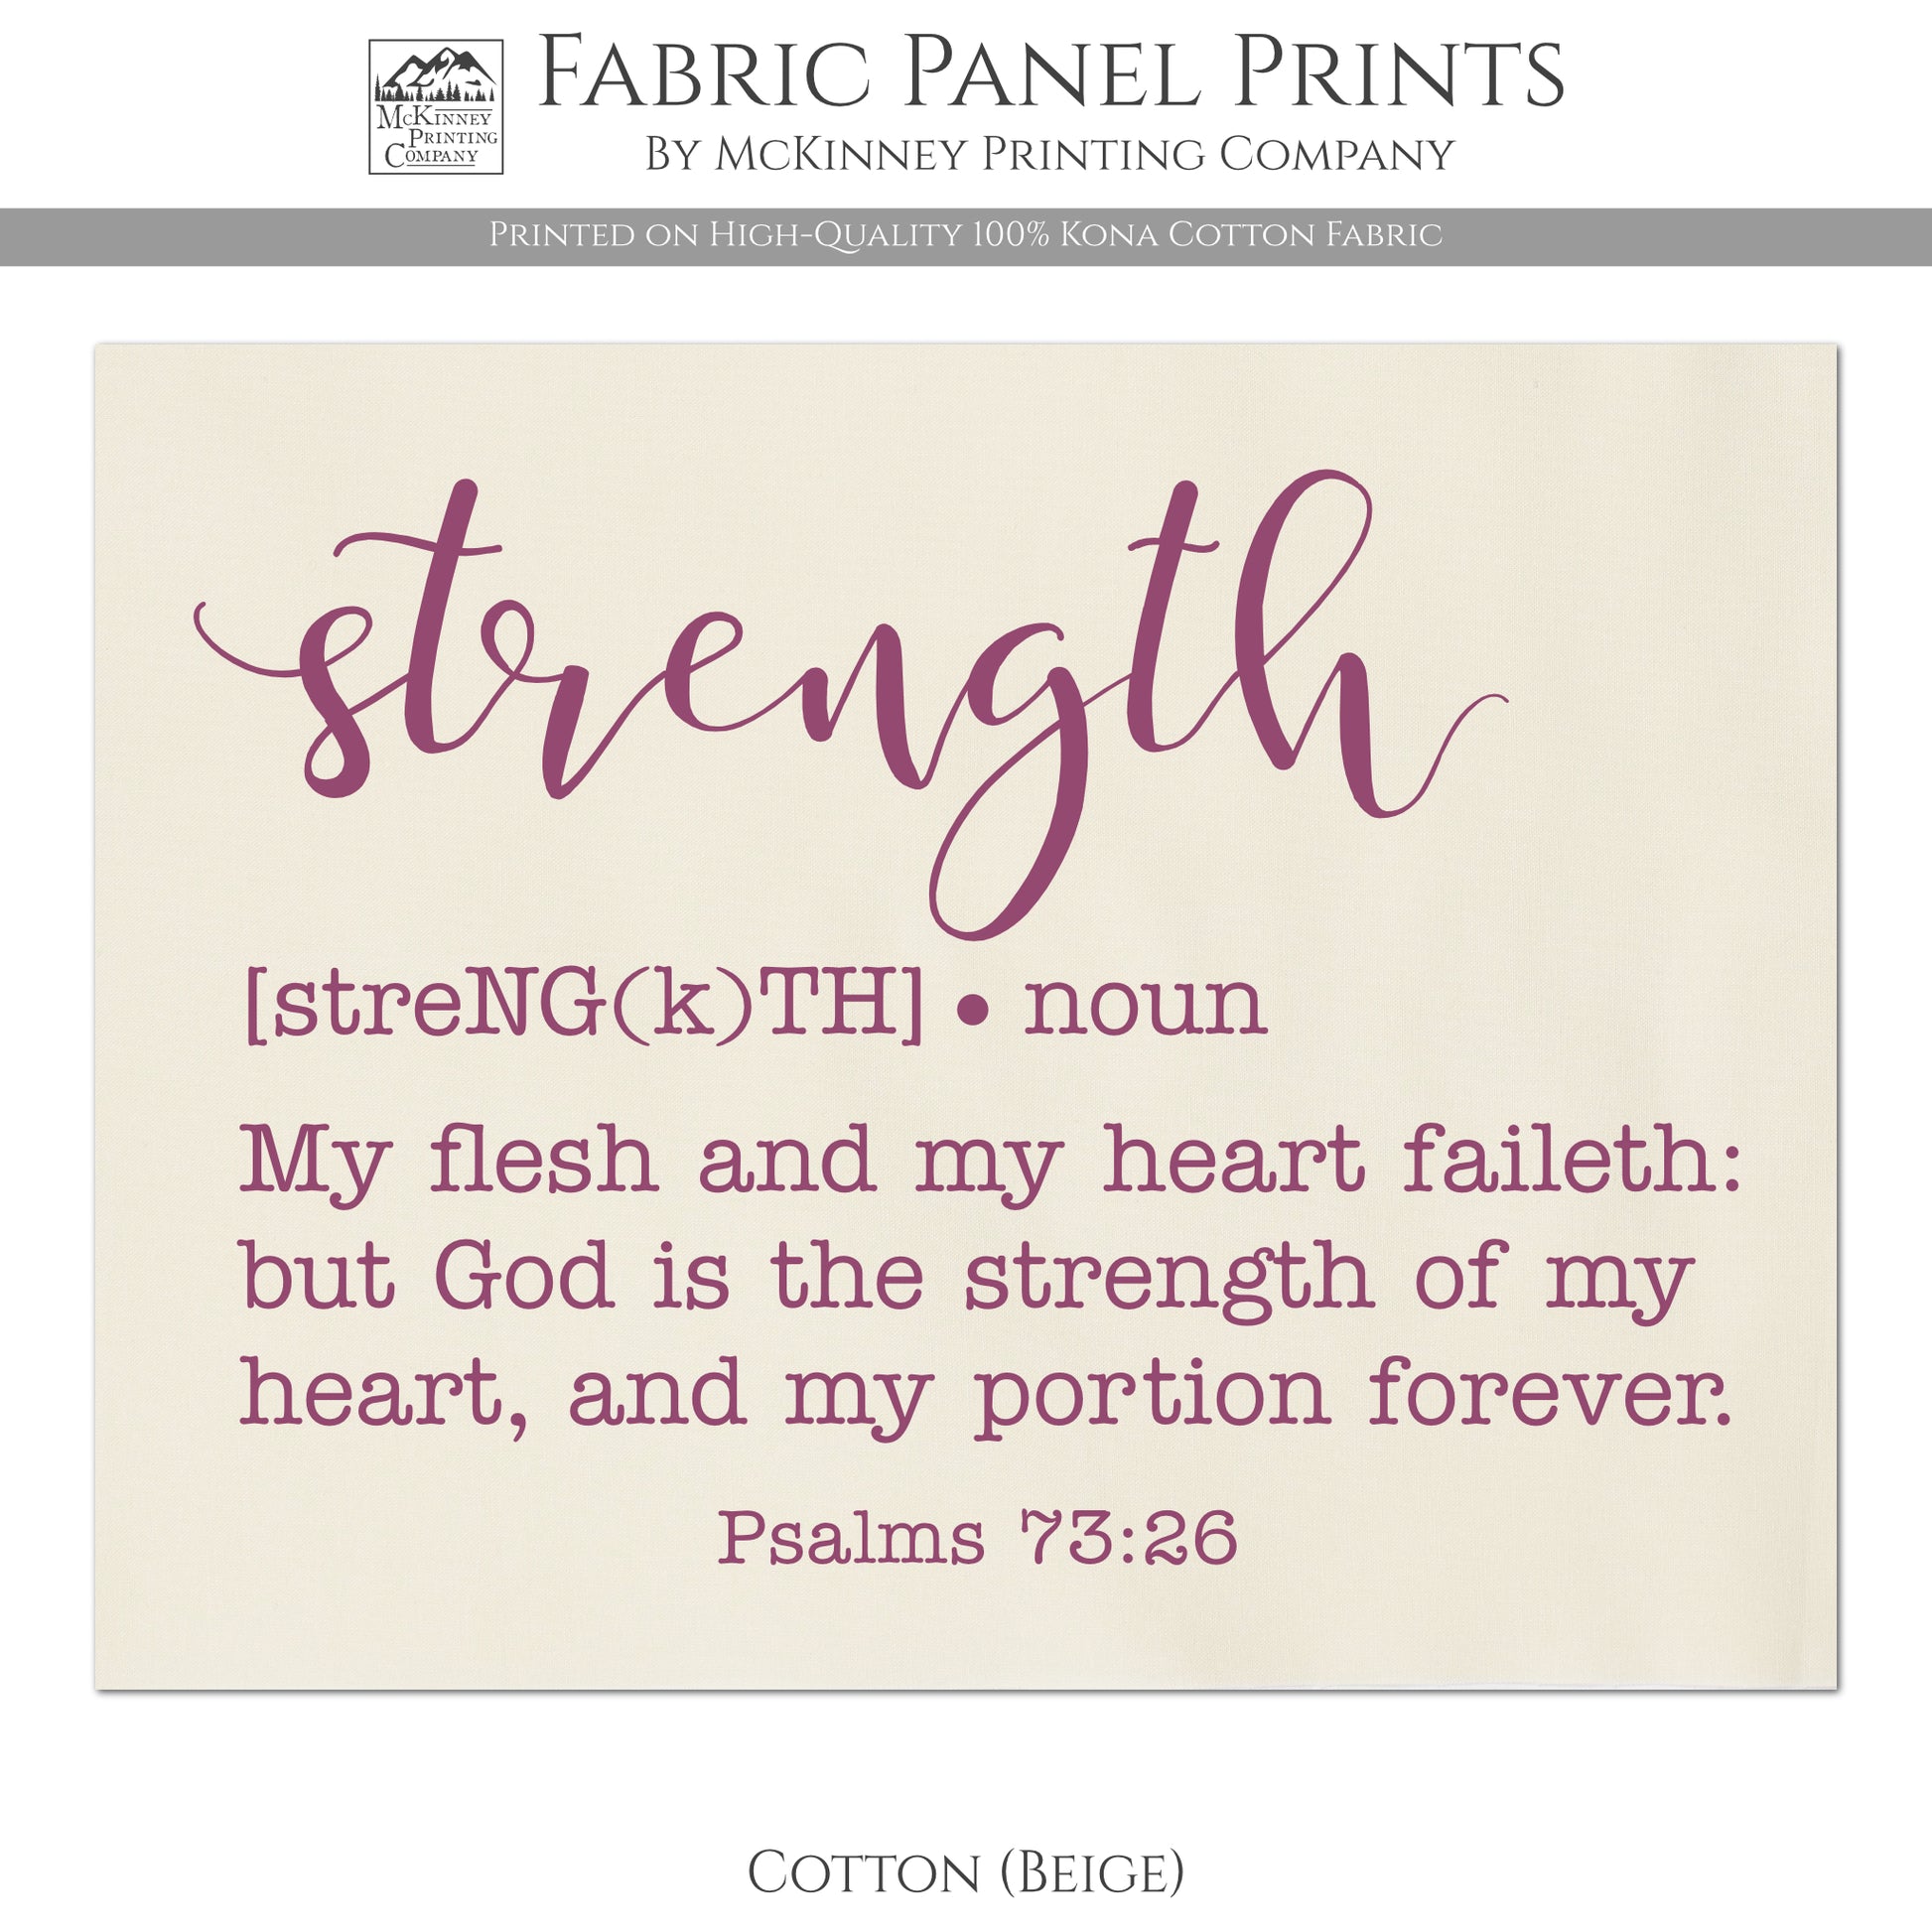 Strength - My Flesh and my heart faileth: but God is the strength of my heart, and my portion forever. Psalms 73:26 - Fabric Panel Print - Cotton